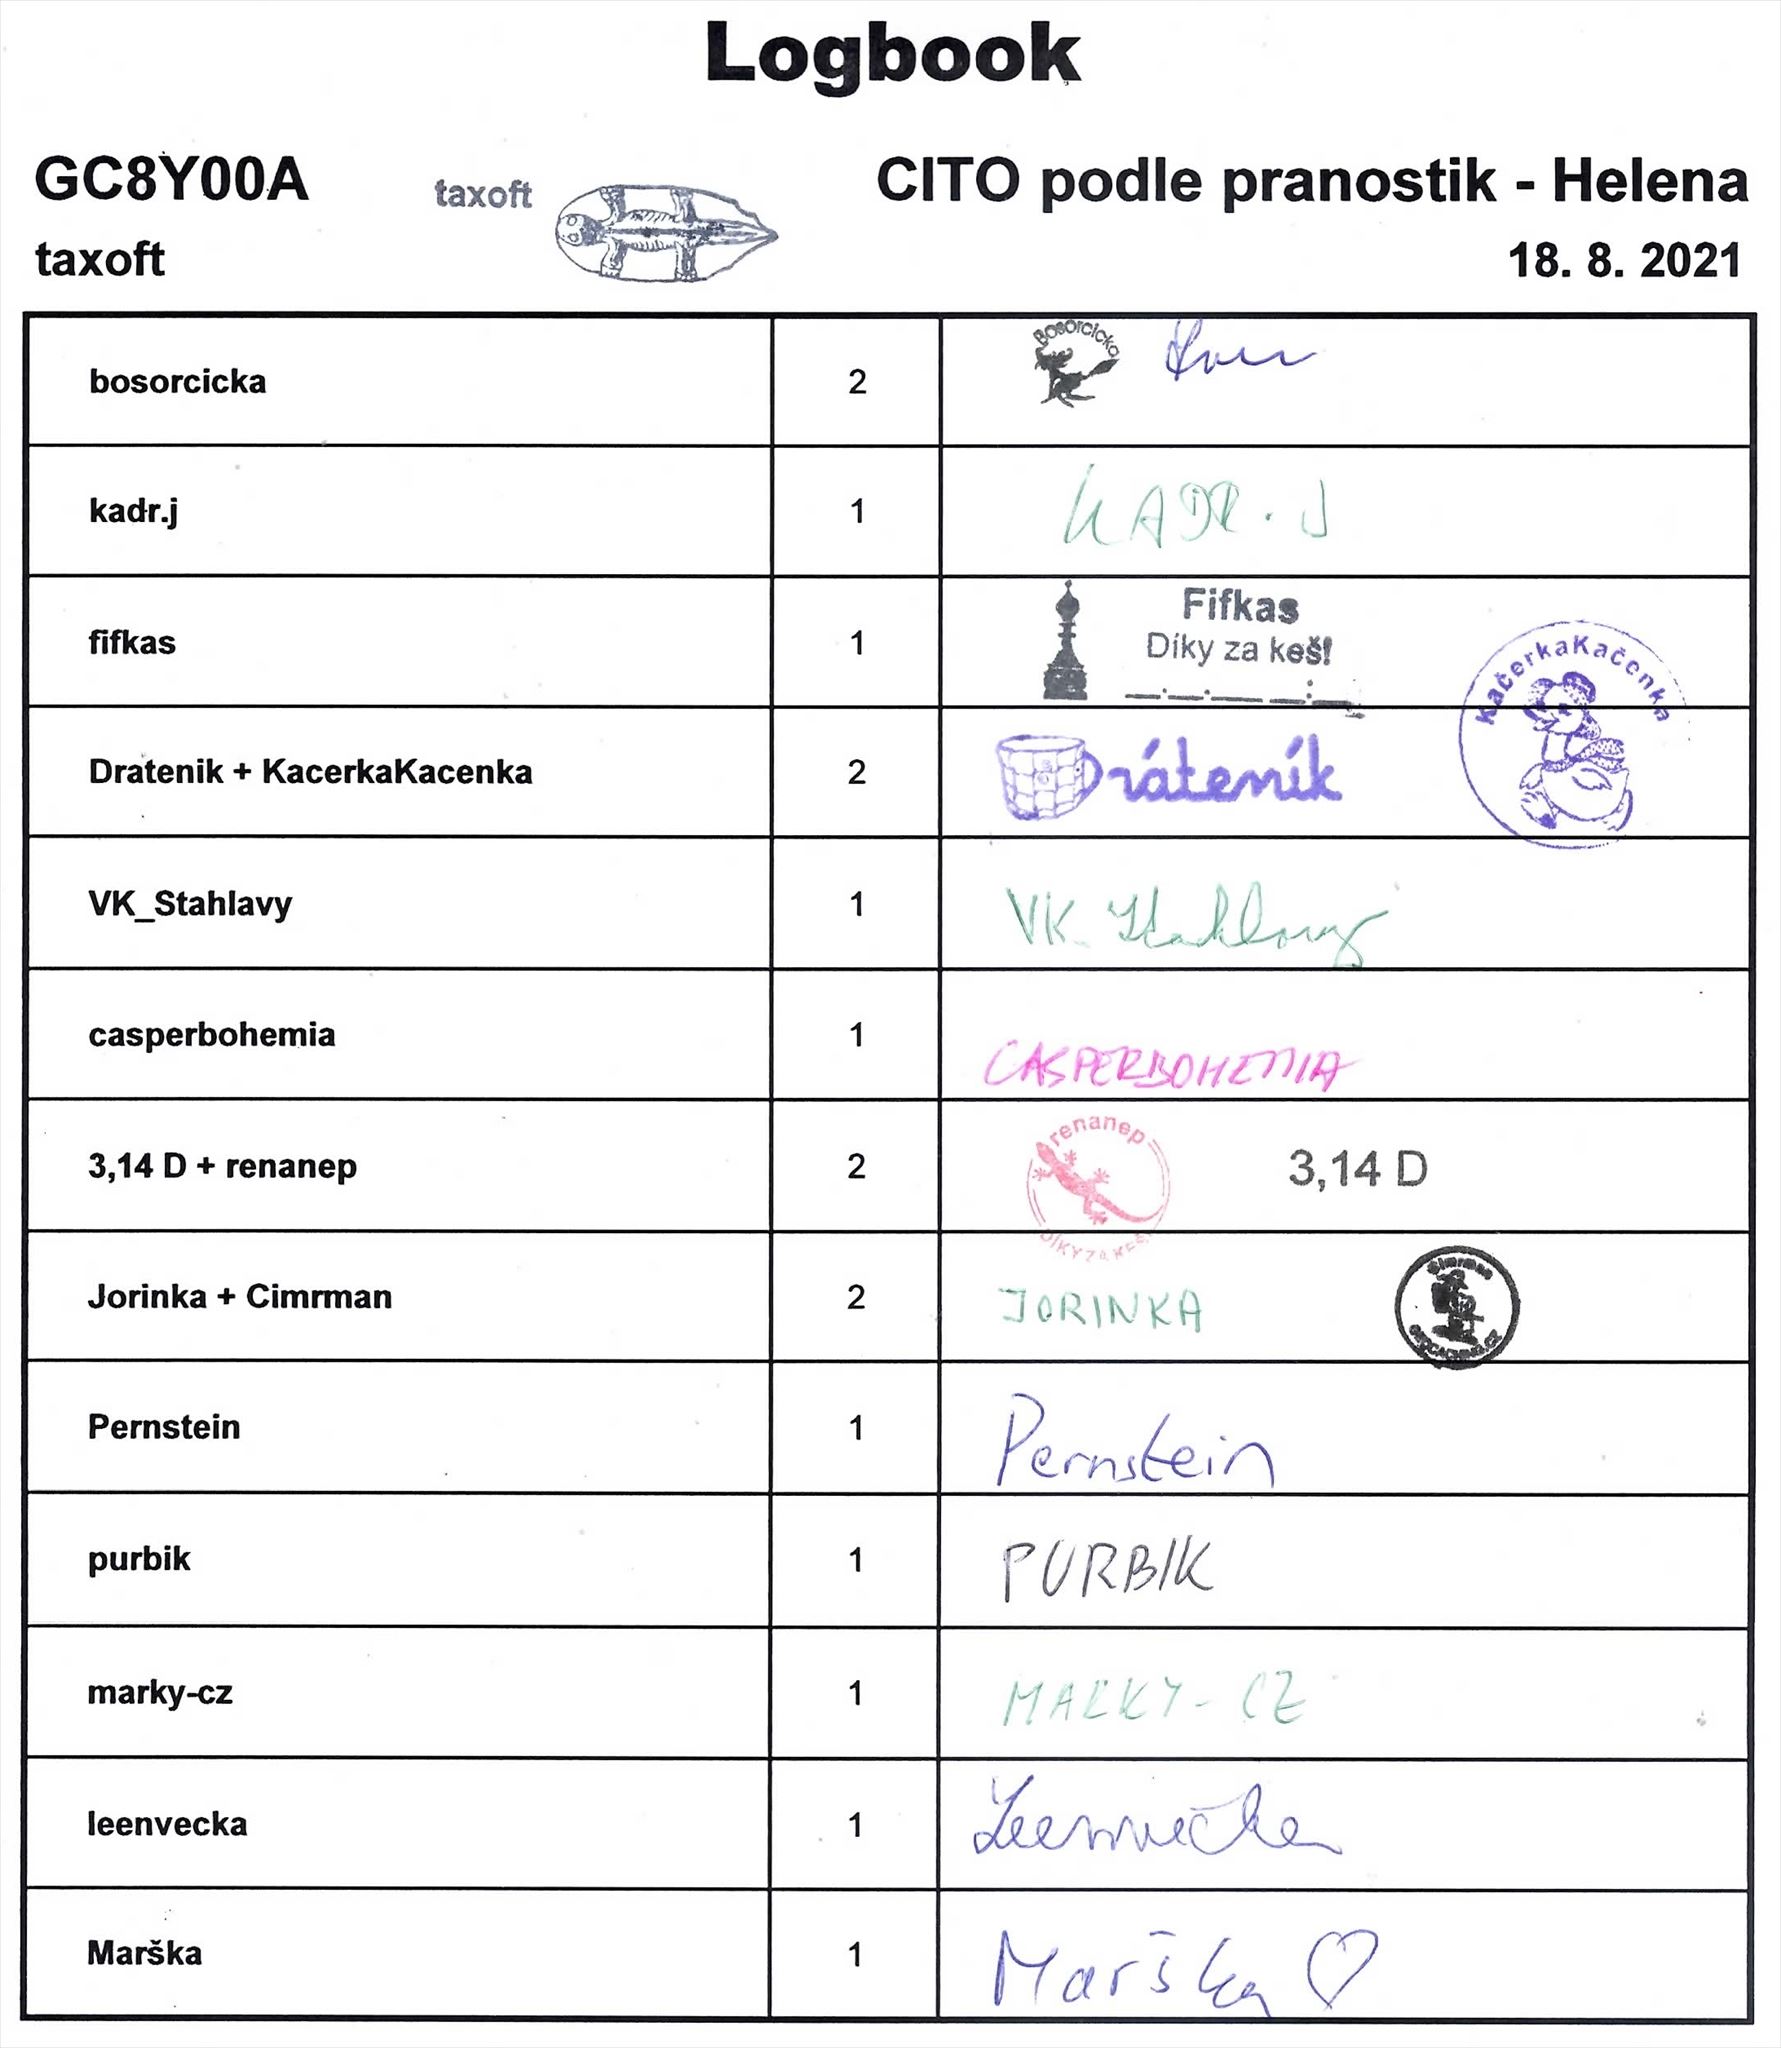 GC8Y00A - CITO dle pranostik - Helena - logbook